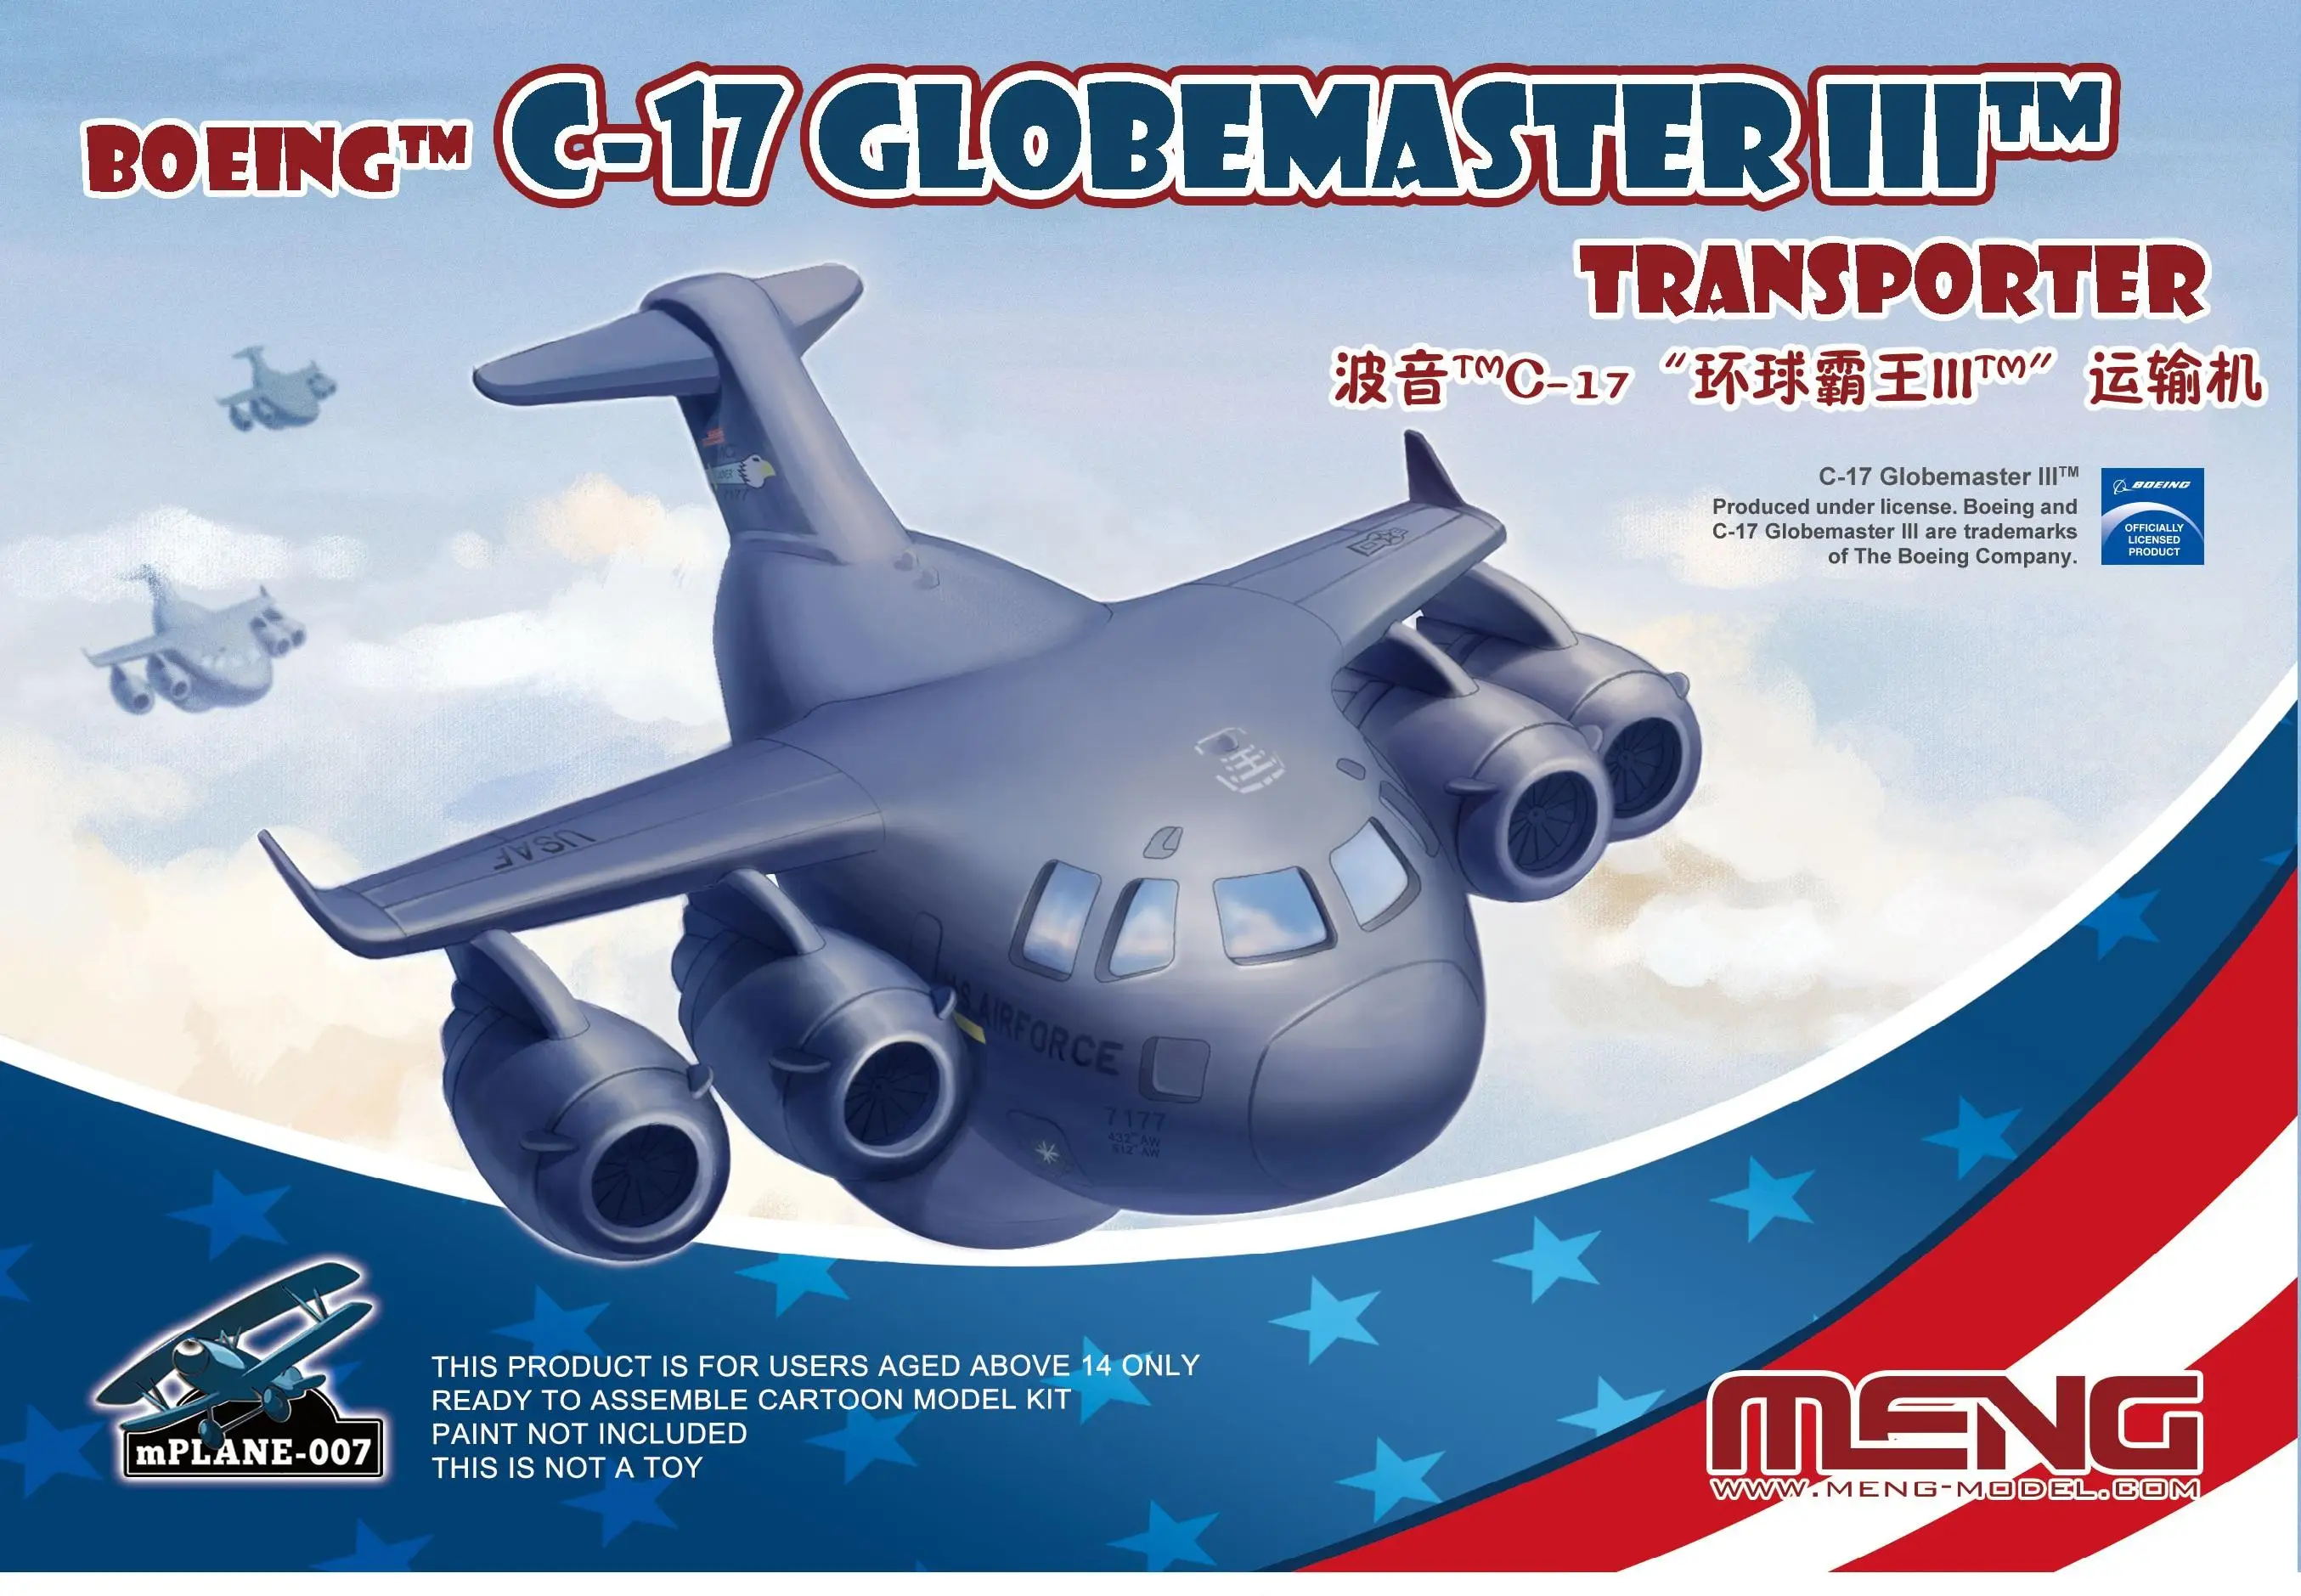 

MENG МОДЕЛЬ mPLANE-007 GLOBEMASTER III TM TRANSPORTER Q версия 2020